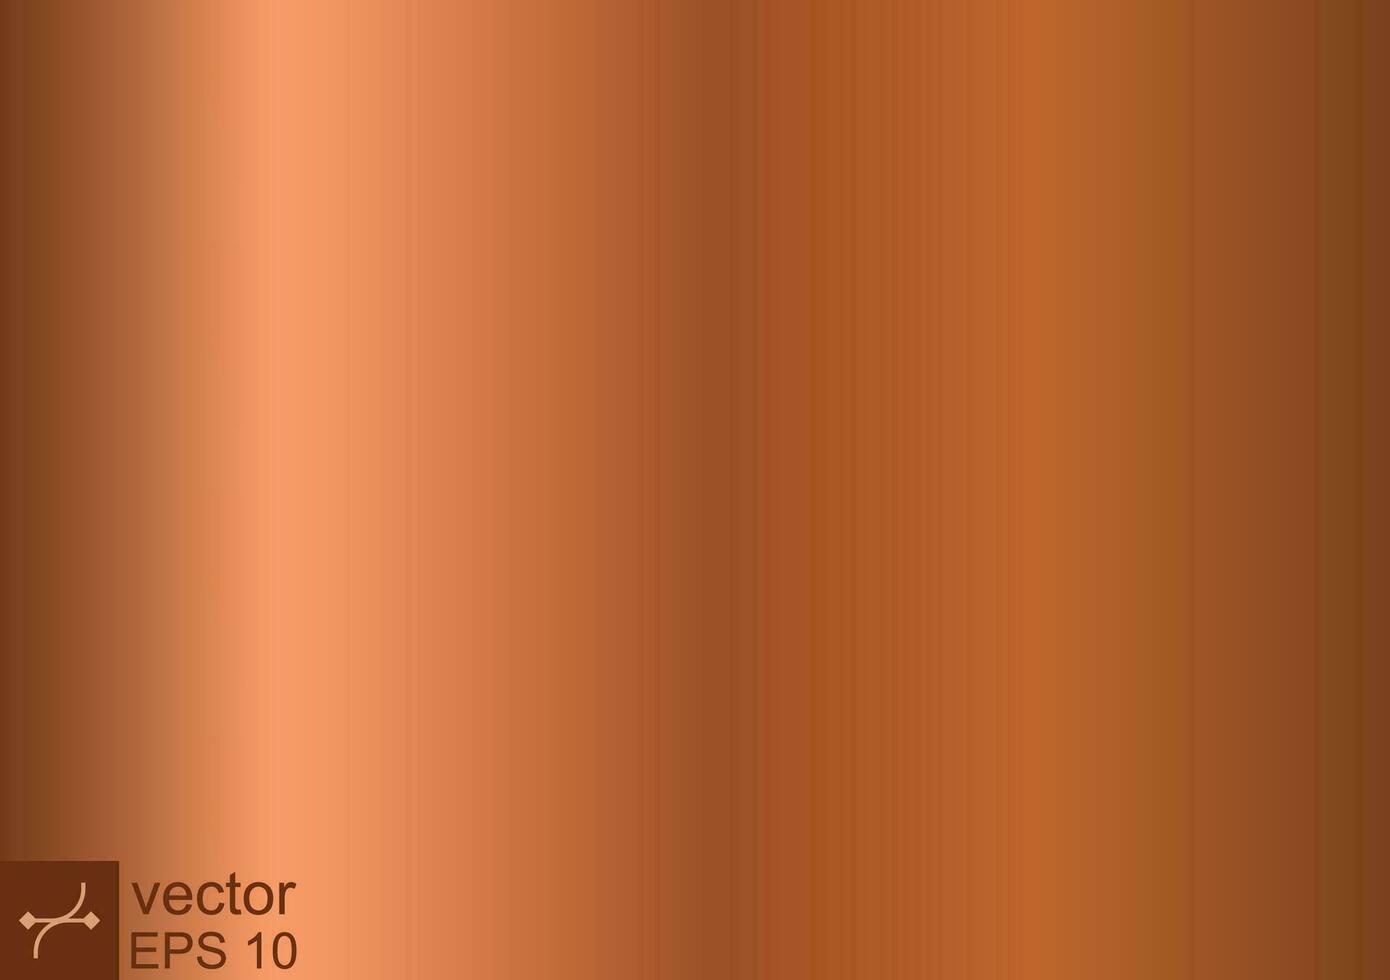 koppar folie textur bakgrund. brun Färg lutning. gyllene glans metallisk lutning mall. vektor illustration isolerat. eps 10.